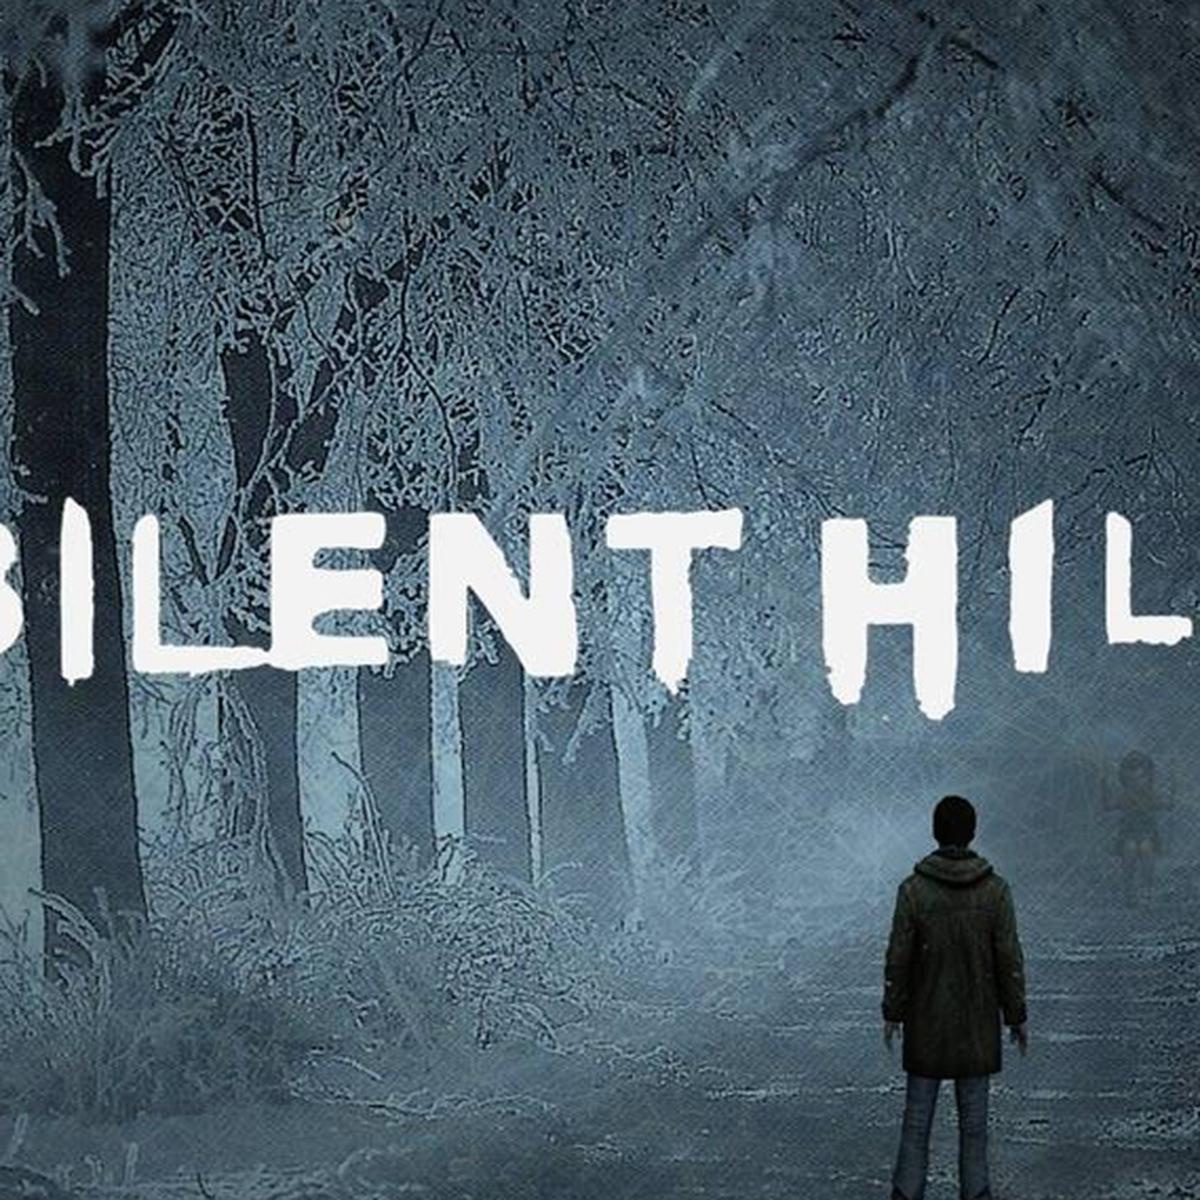 Silent Hill 2 - Juegos de PS5